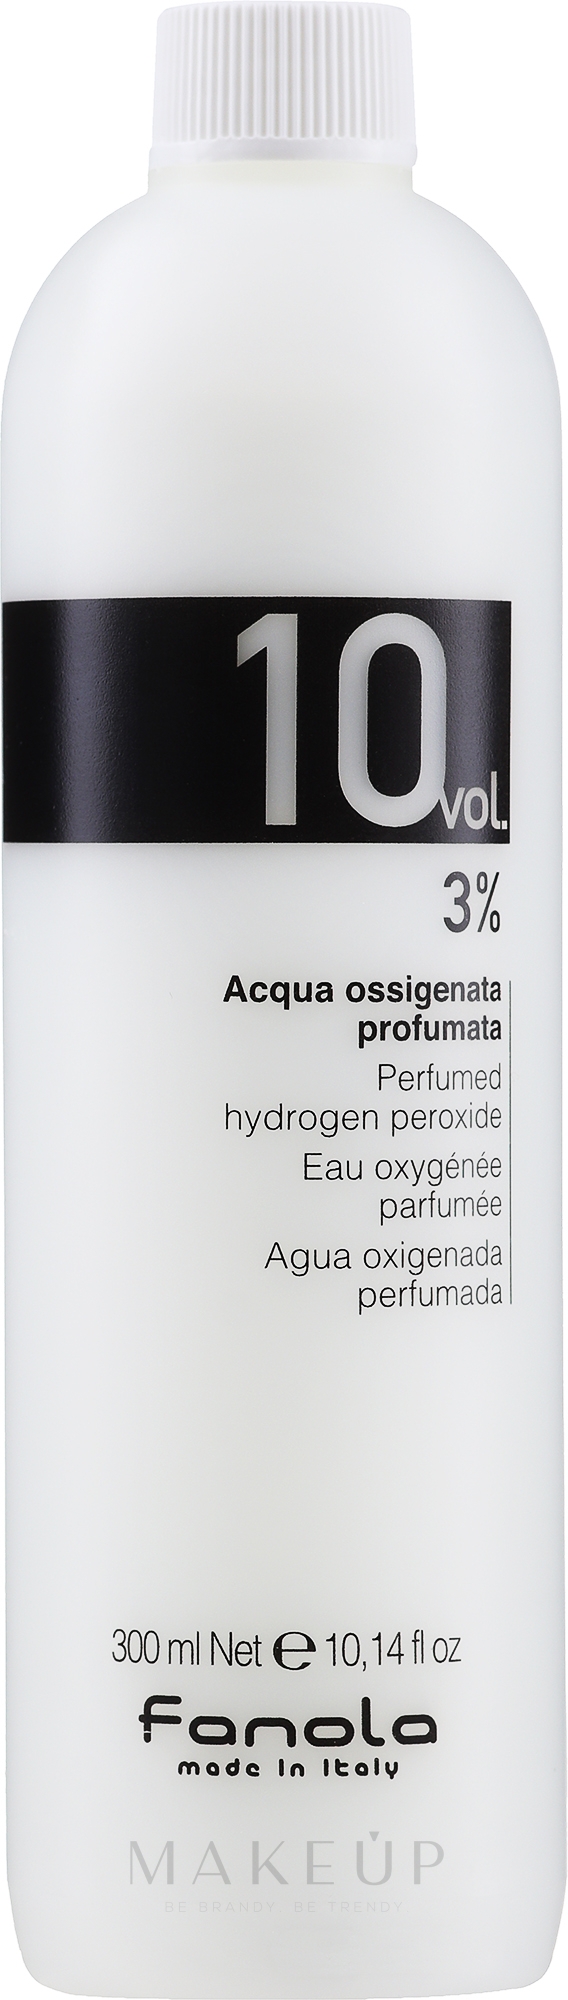 Entwicklerlotion 3% - Fanola Acqua Ossigenata Perfumed Hydrogen Peroxide Hair Oxidant 10vol 3% — Foto 300 ml